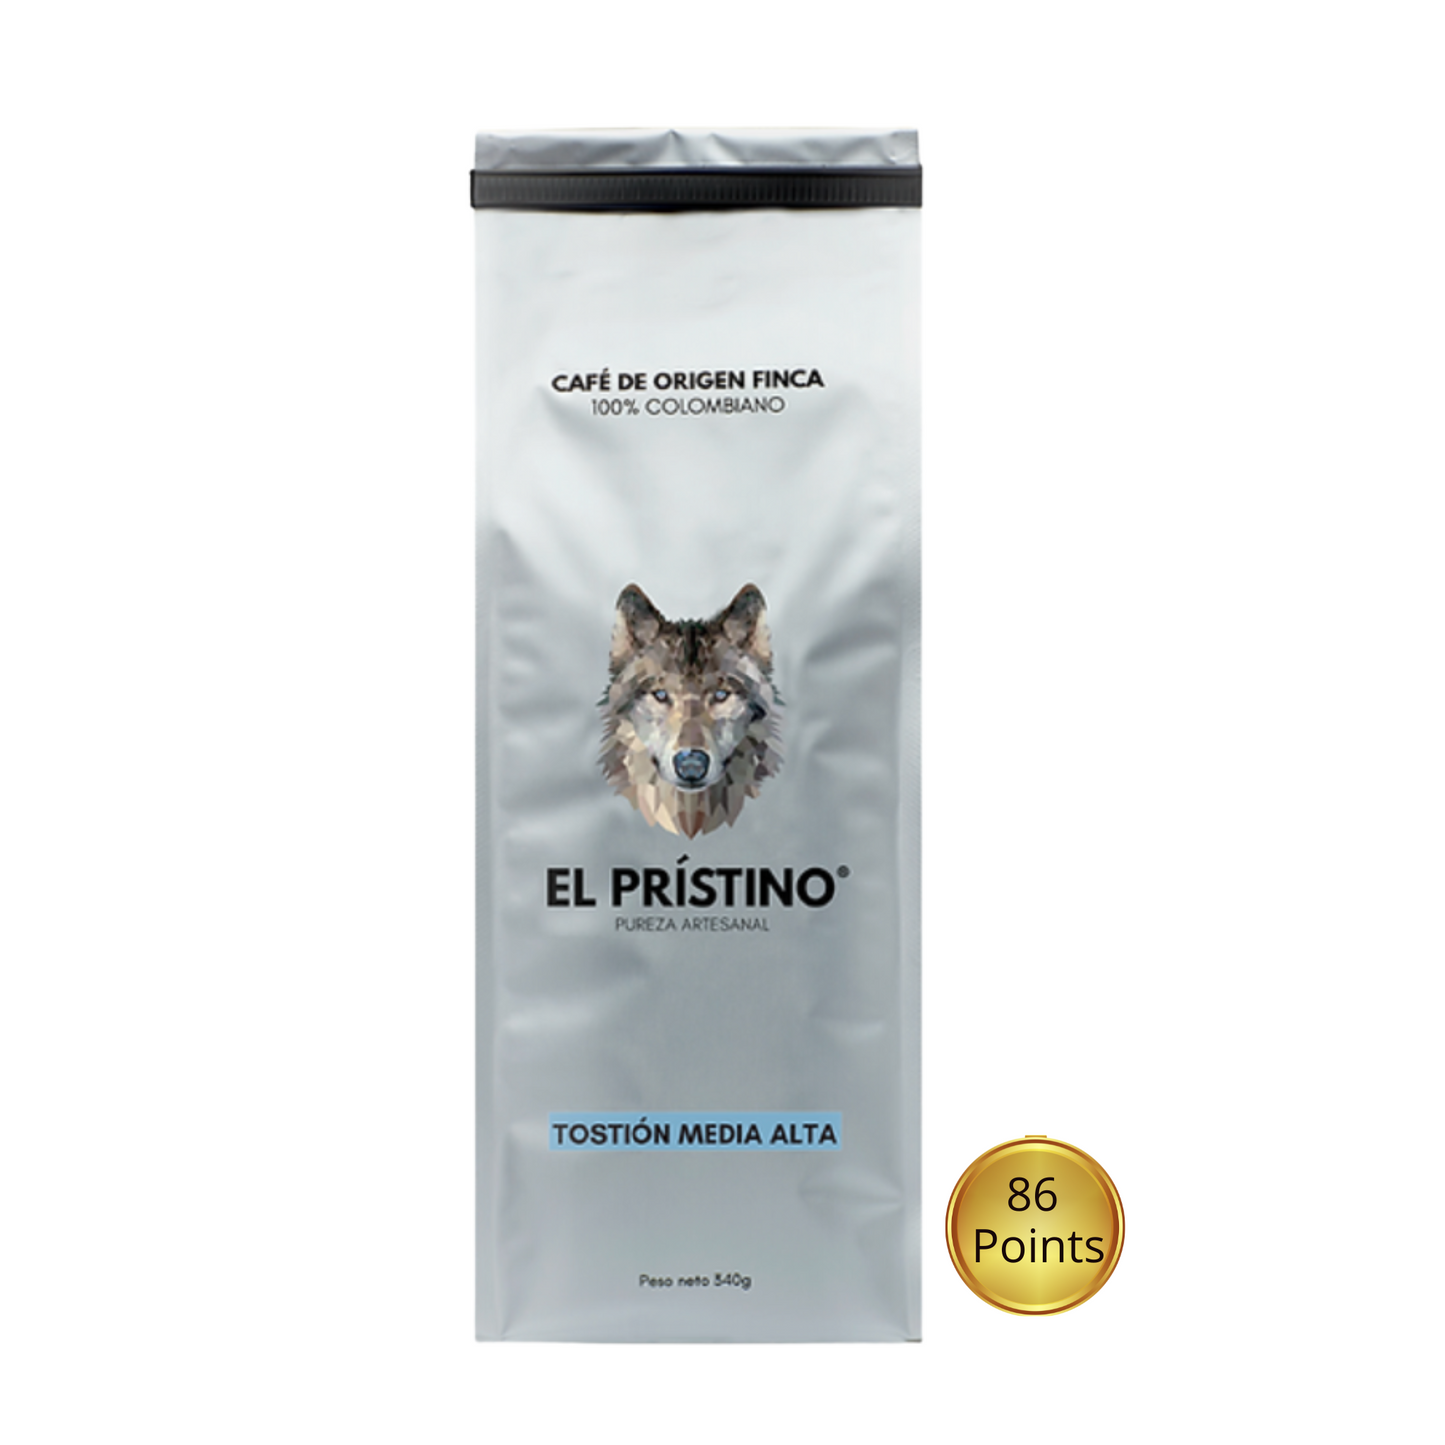 El Prístino Specialty Colombian Coffee - Medium high Roast. Buy it here at Coffee Bean and Birds